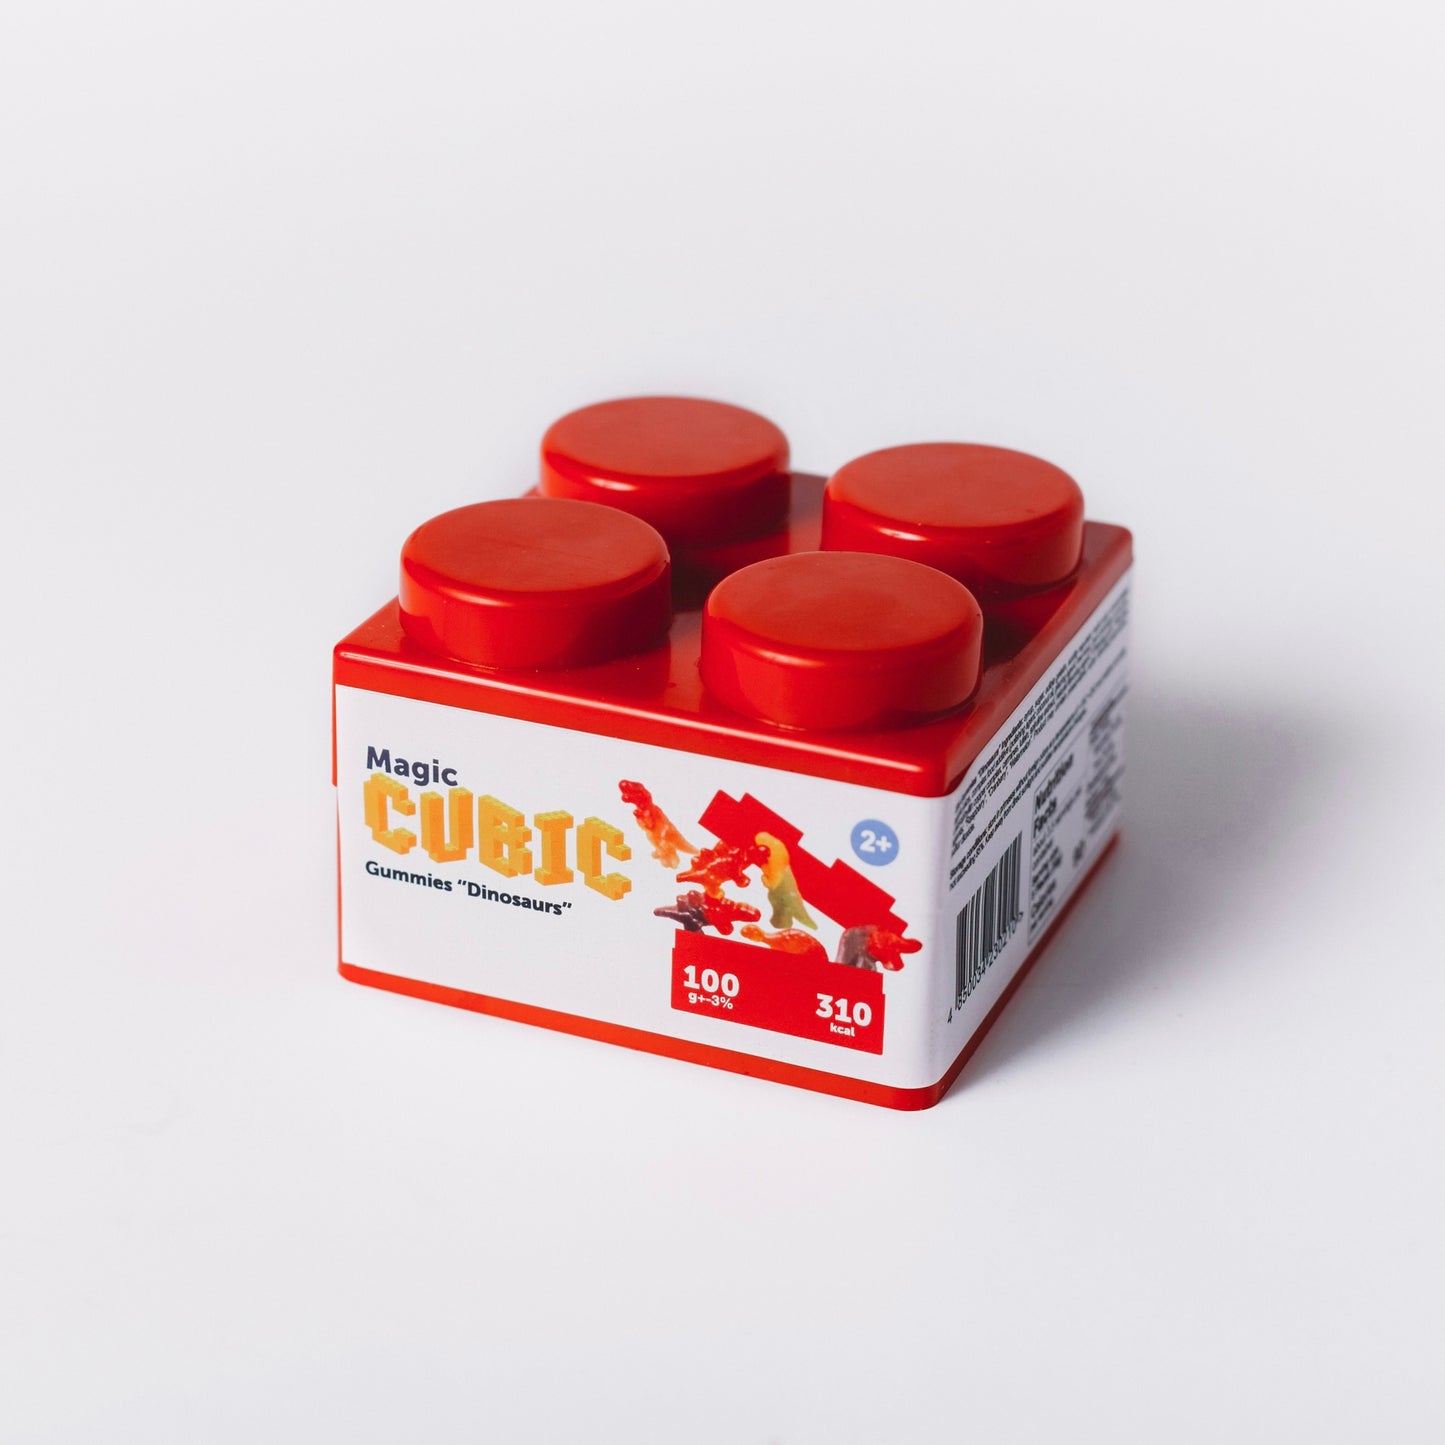 Magic CUBIC Red “Dinosaurs” Gummies, 3.5 OZ